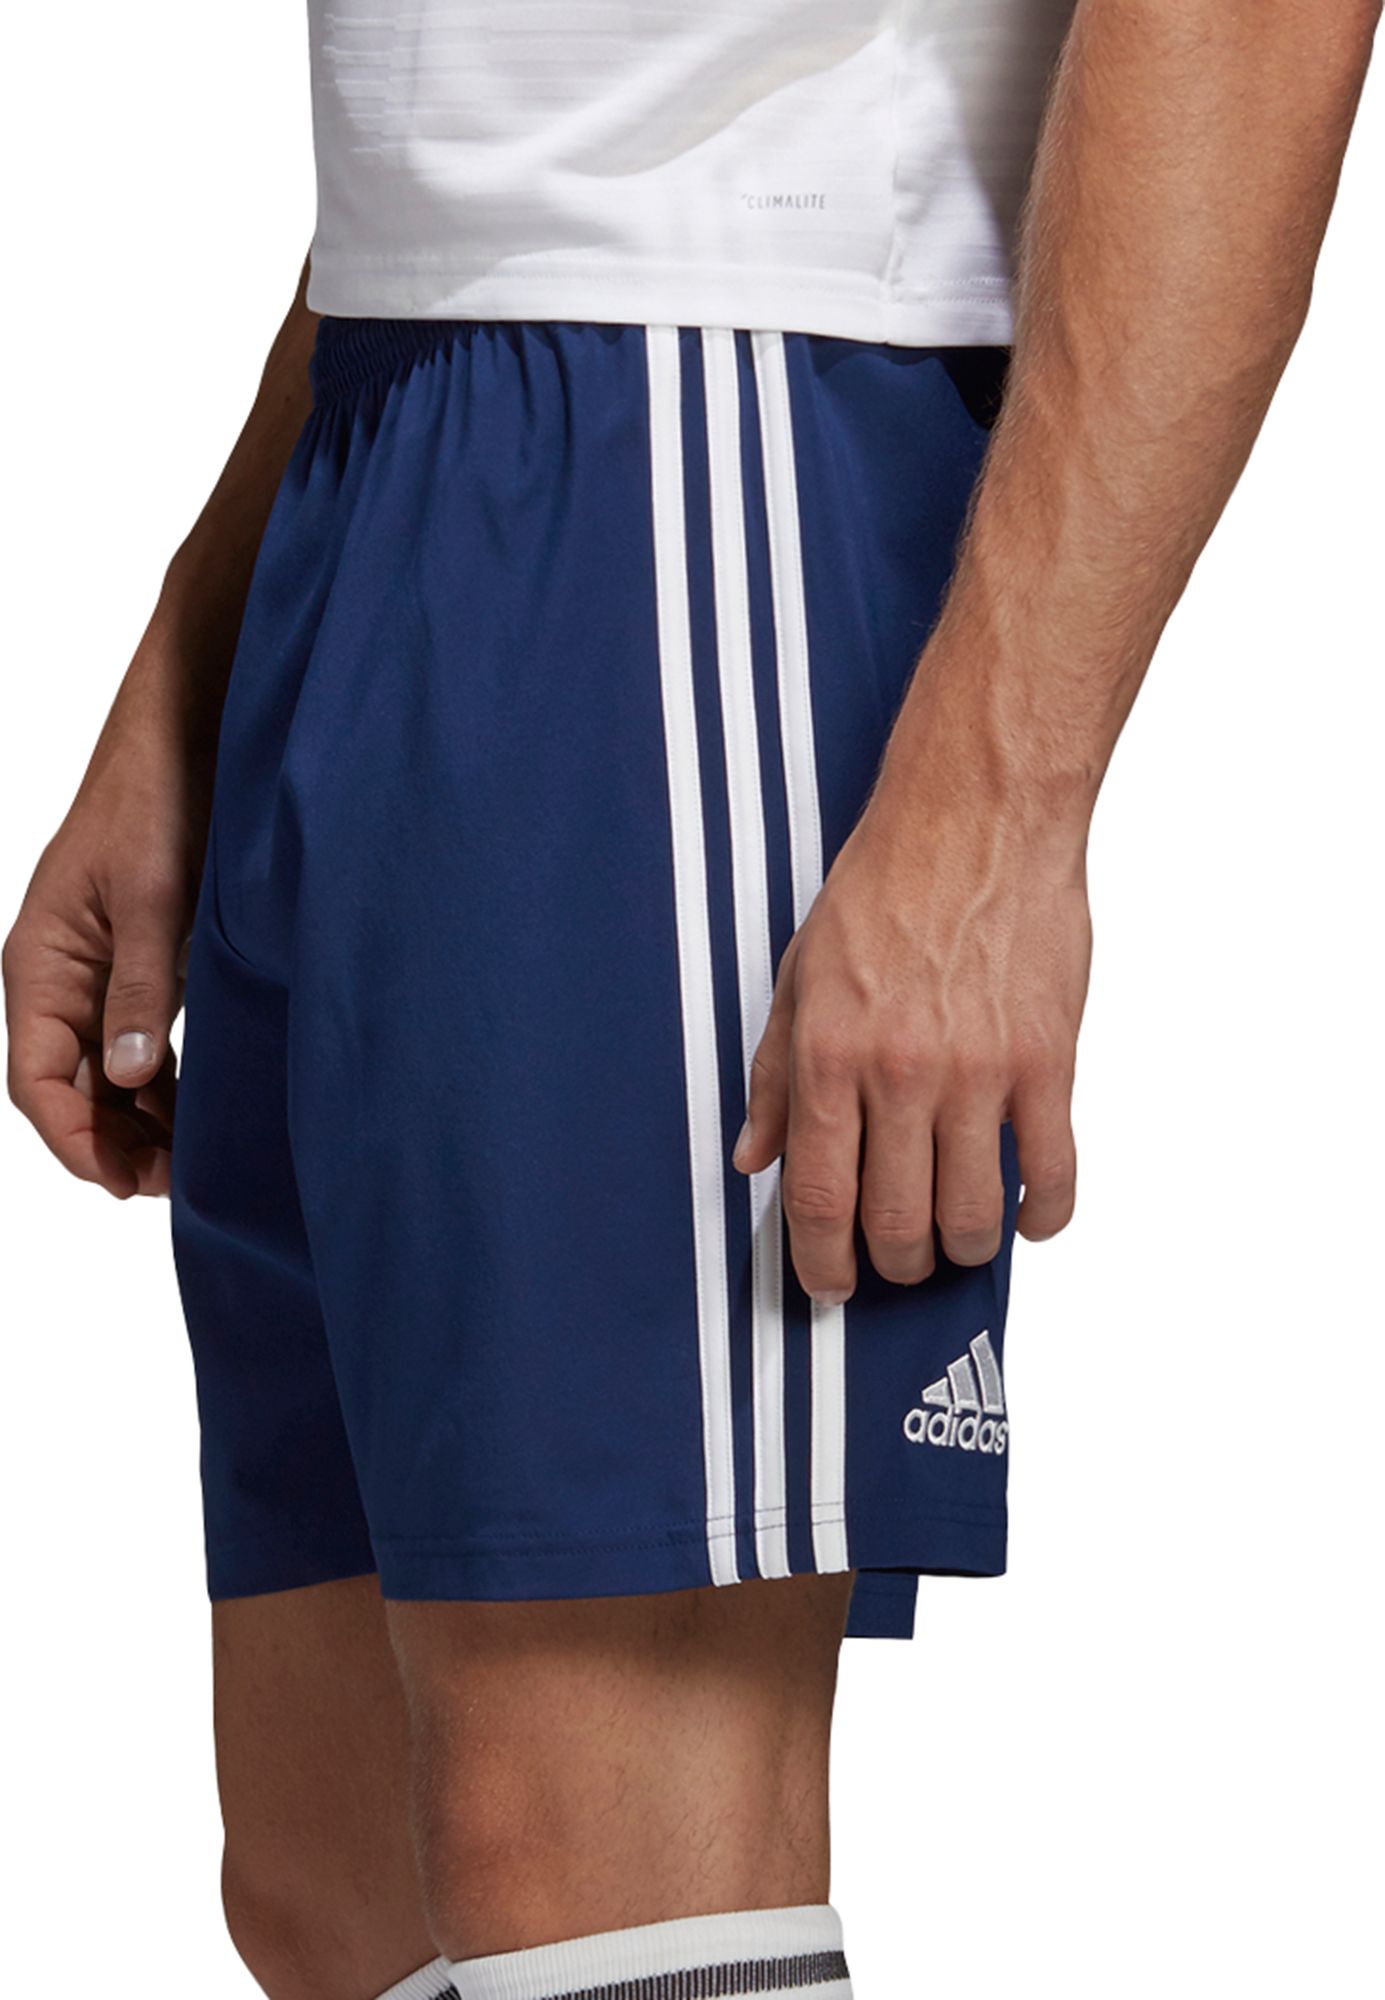 adidas men's condivo 18 soccer shorts